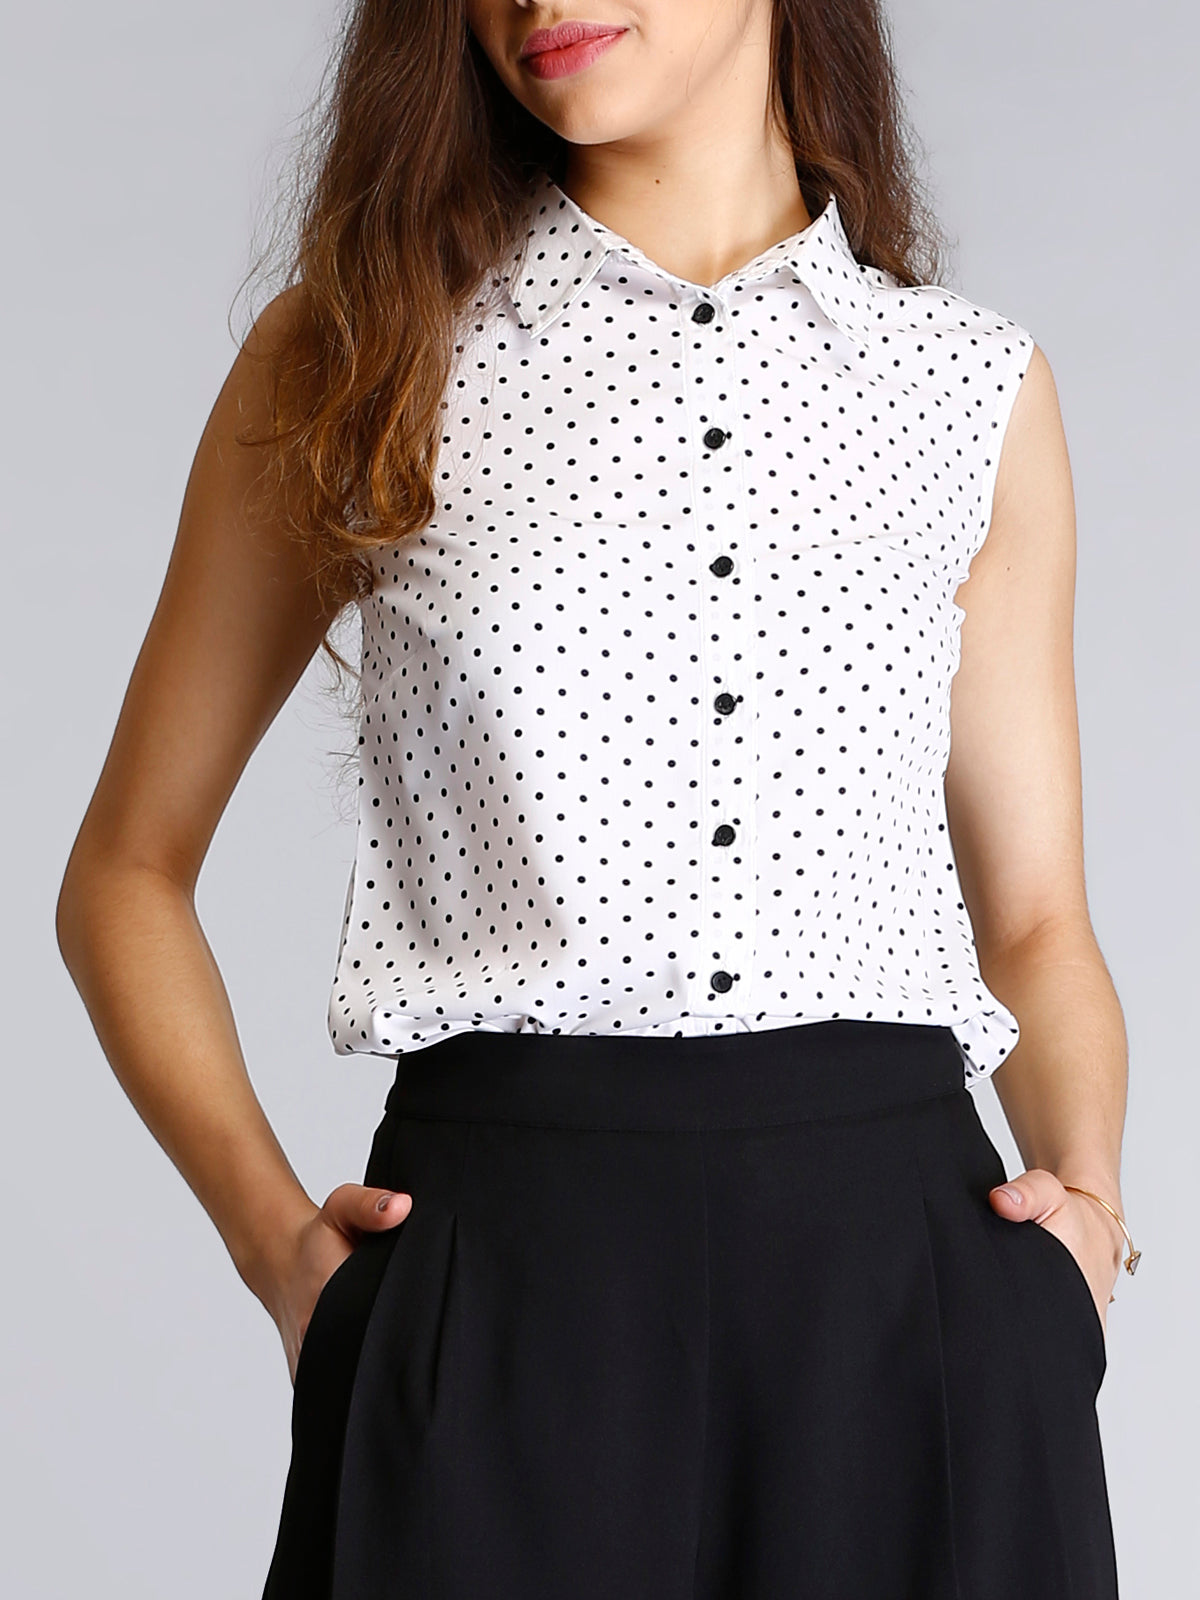 Collared Polka Dot Shirt - White and Black